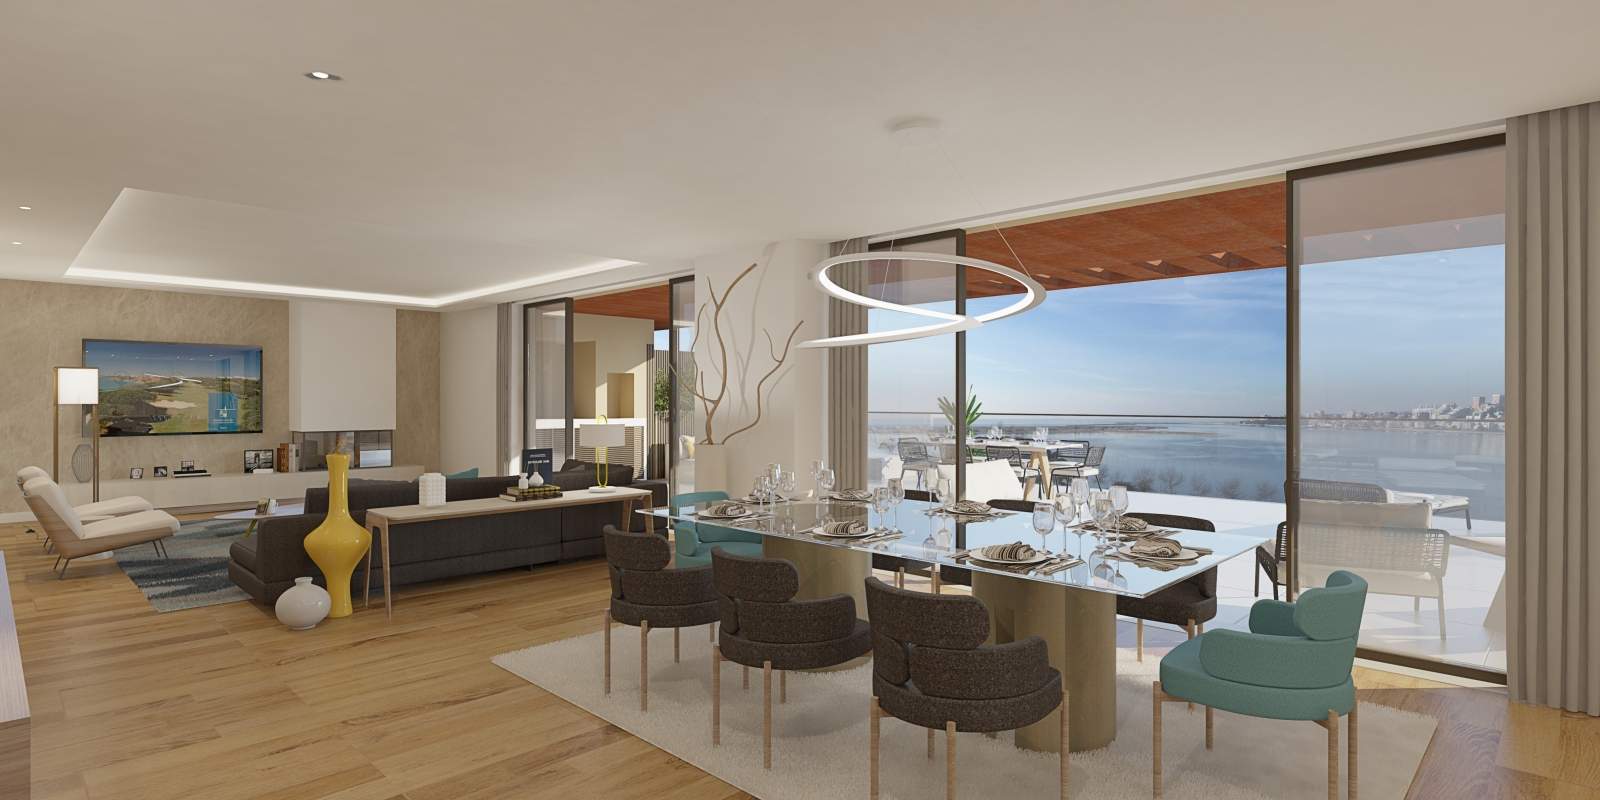 Apartment for sale with terrace, in exclusive condominium, V. N. Gaia, Porto, Portugal_175468